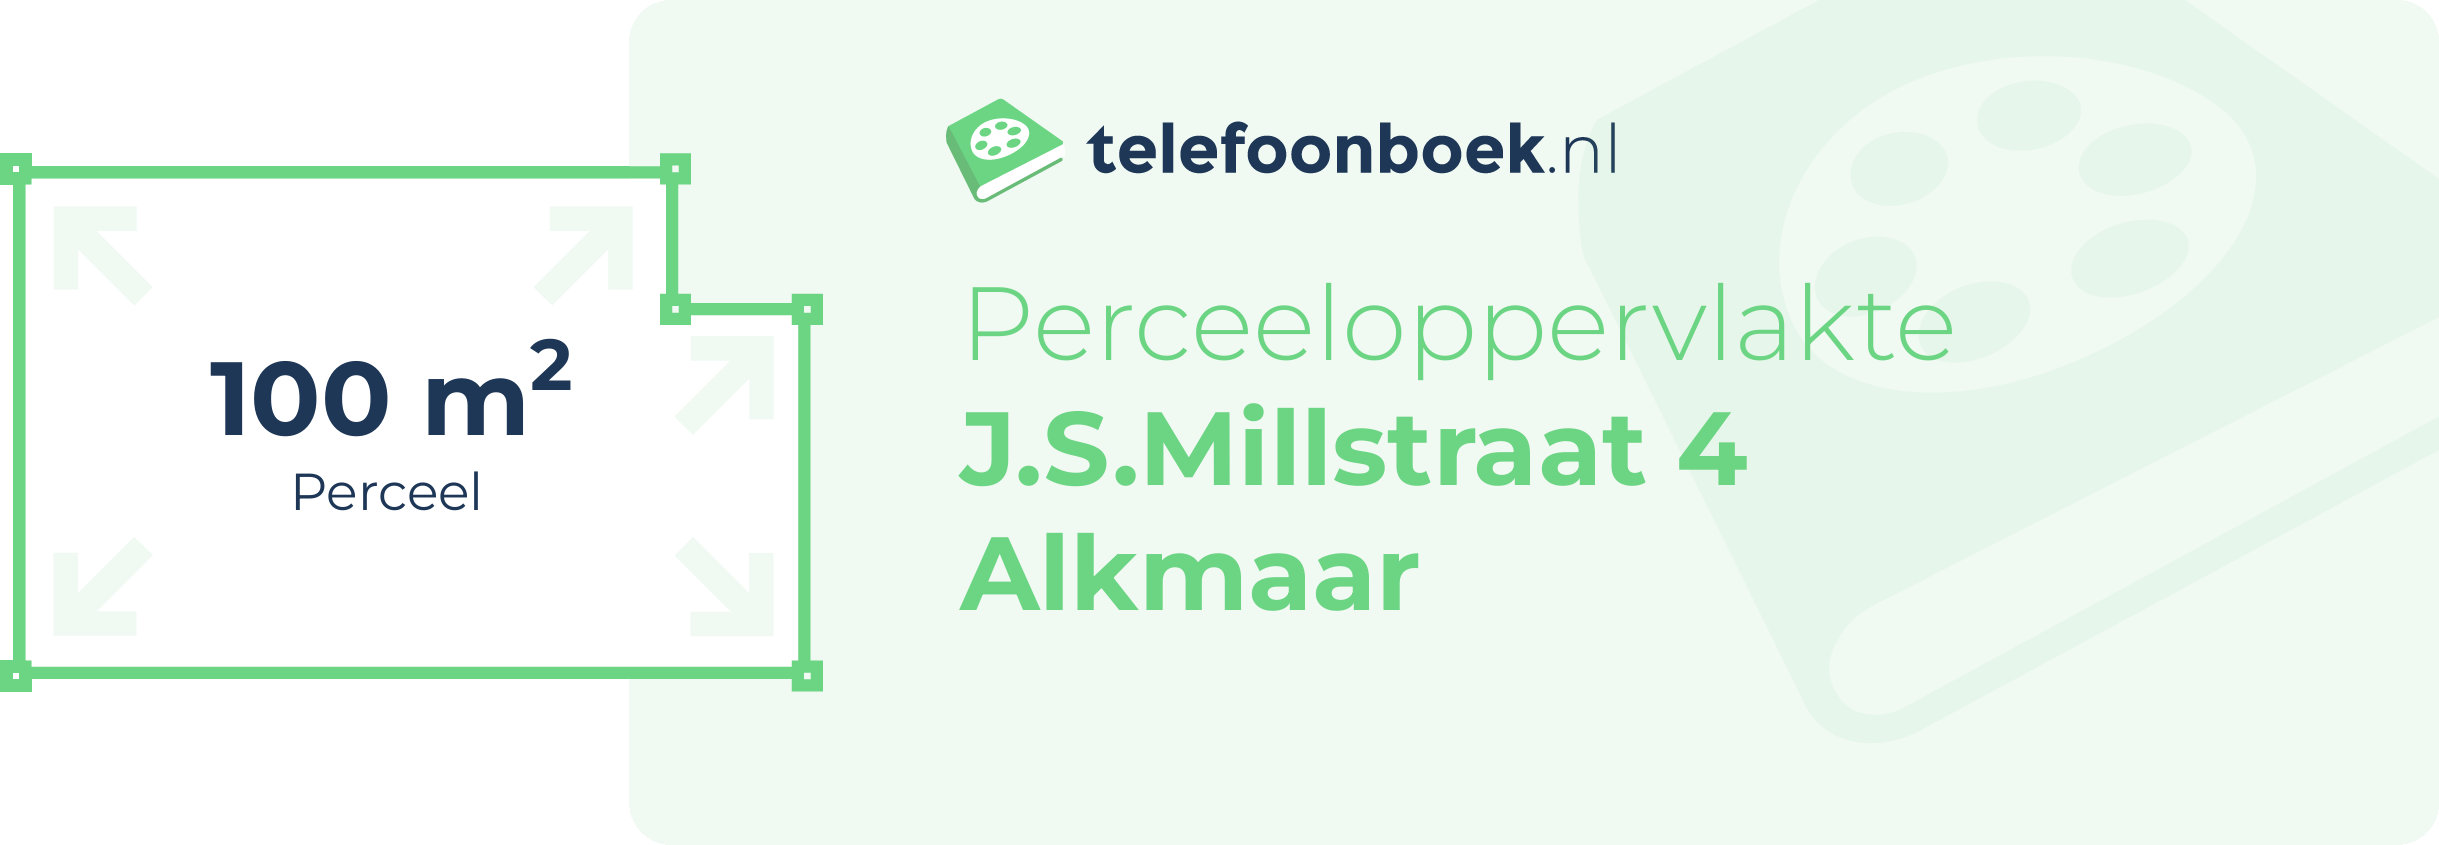 Perceeloppervlakte J.S.Millstraat 4 Alkmaar